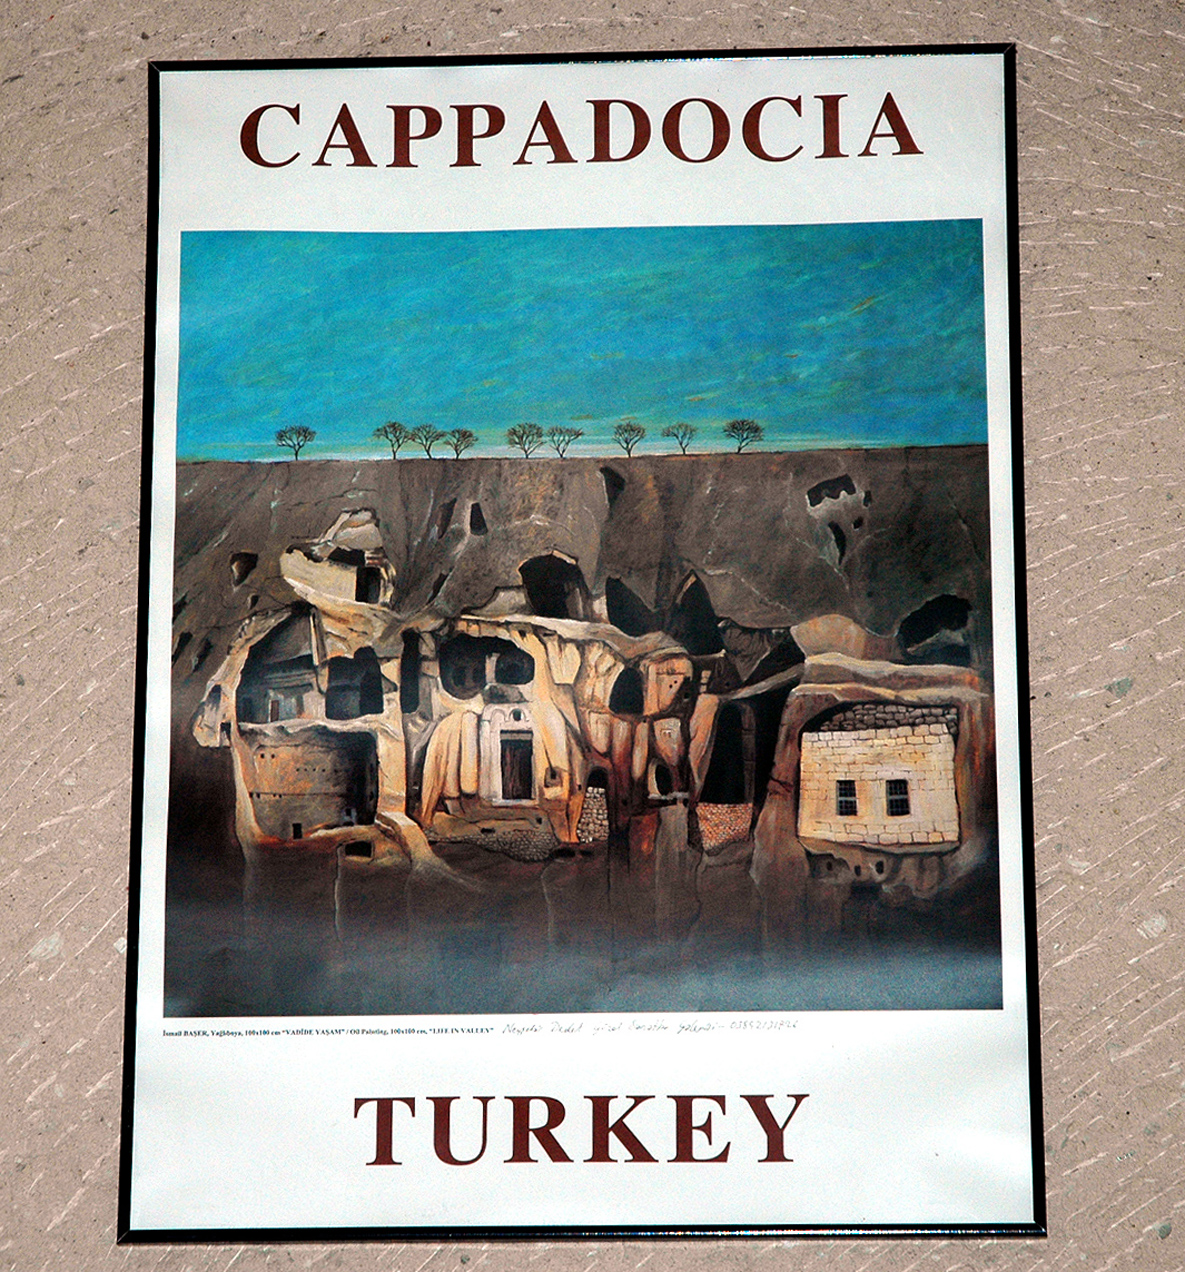 Eclipse 1999 - Cappadocia - A40-Title